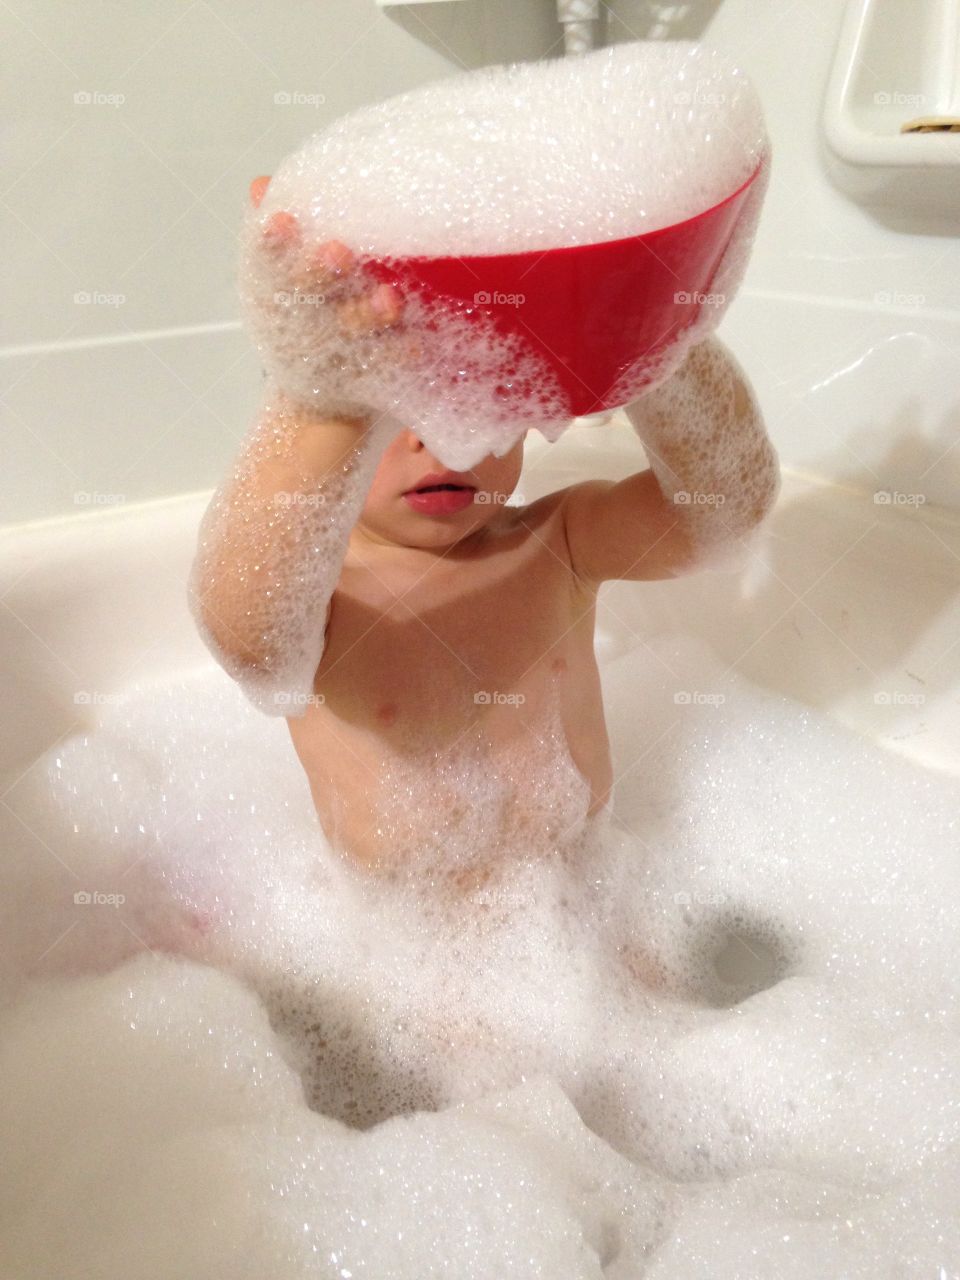 Bubble bath time!